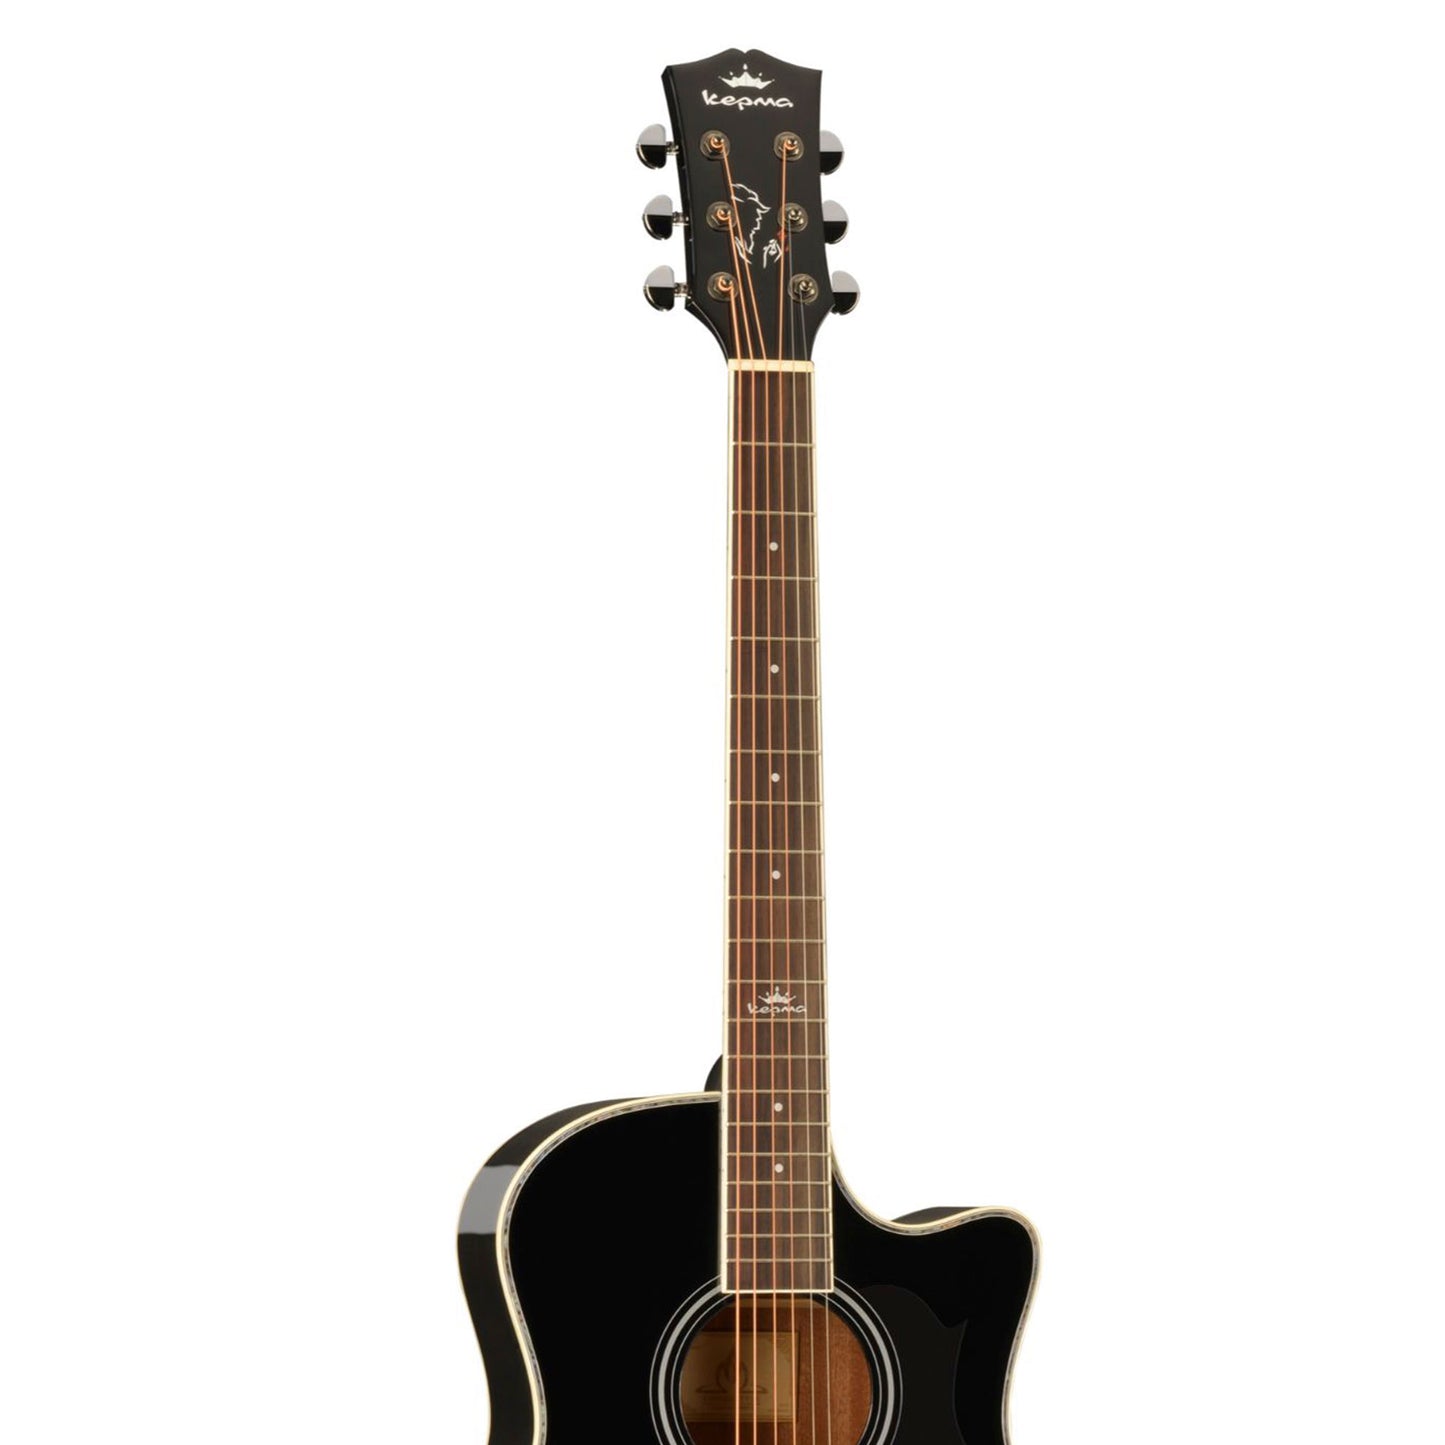 Kepma A1C Acoustic Guitar- Black Glossy